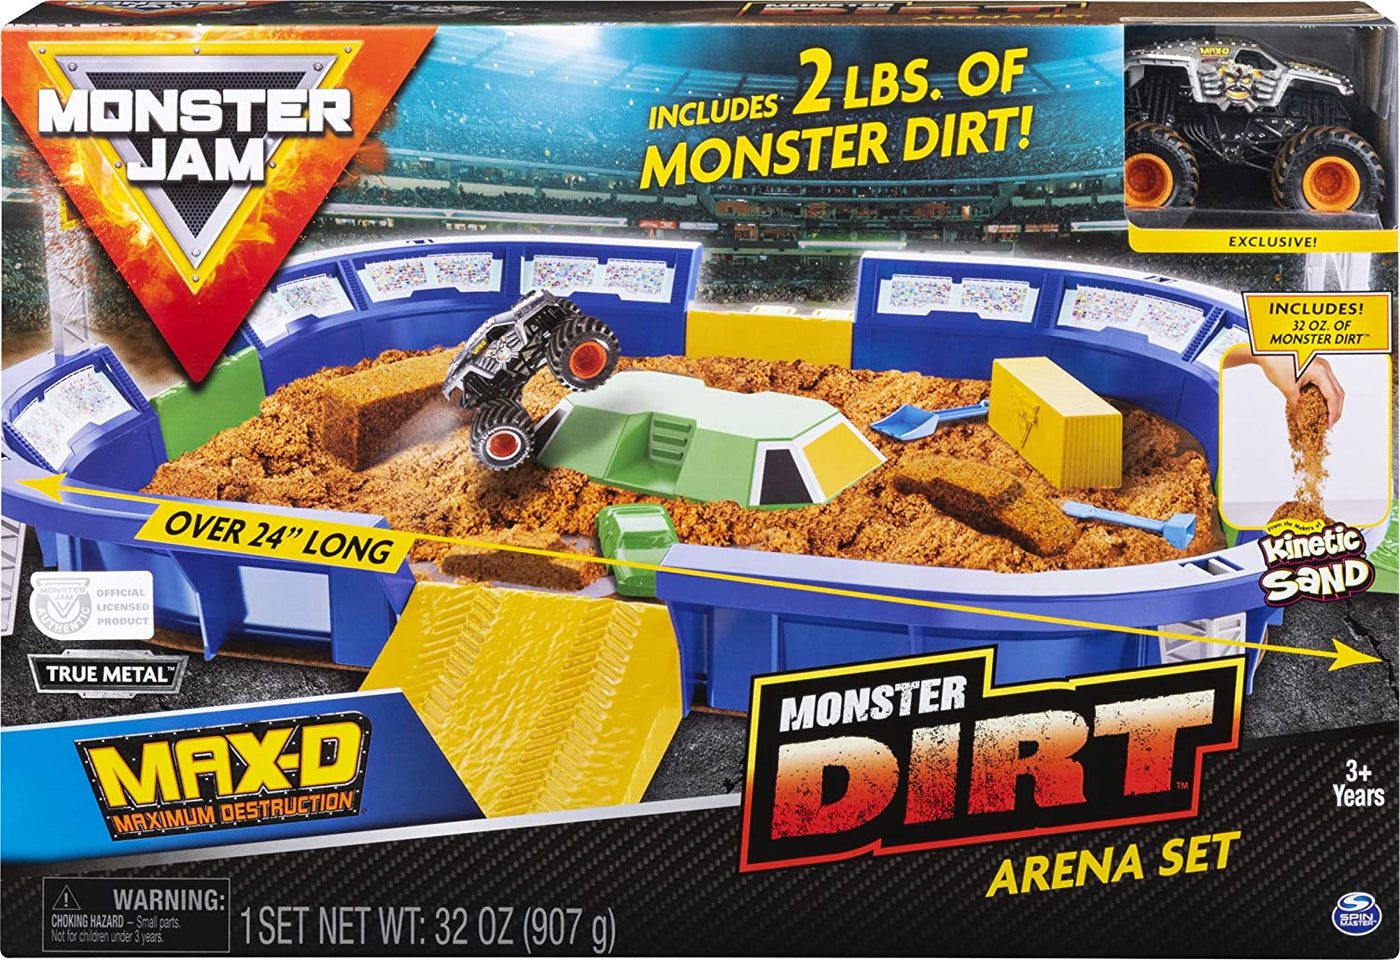 Monster Dirt Arena Set- Max-D | Monster Jam